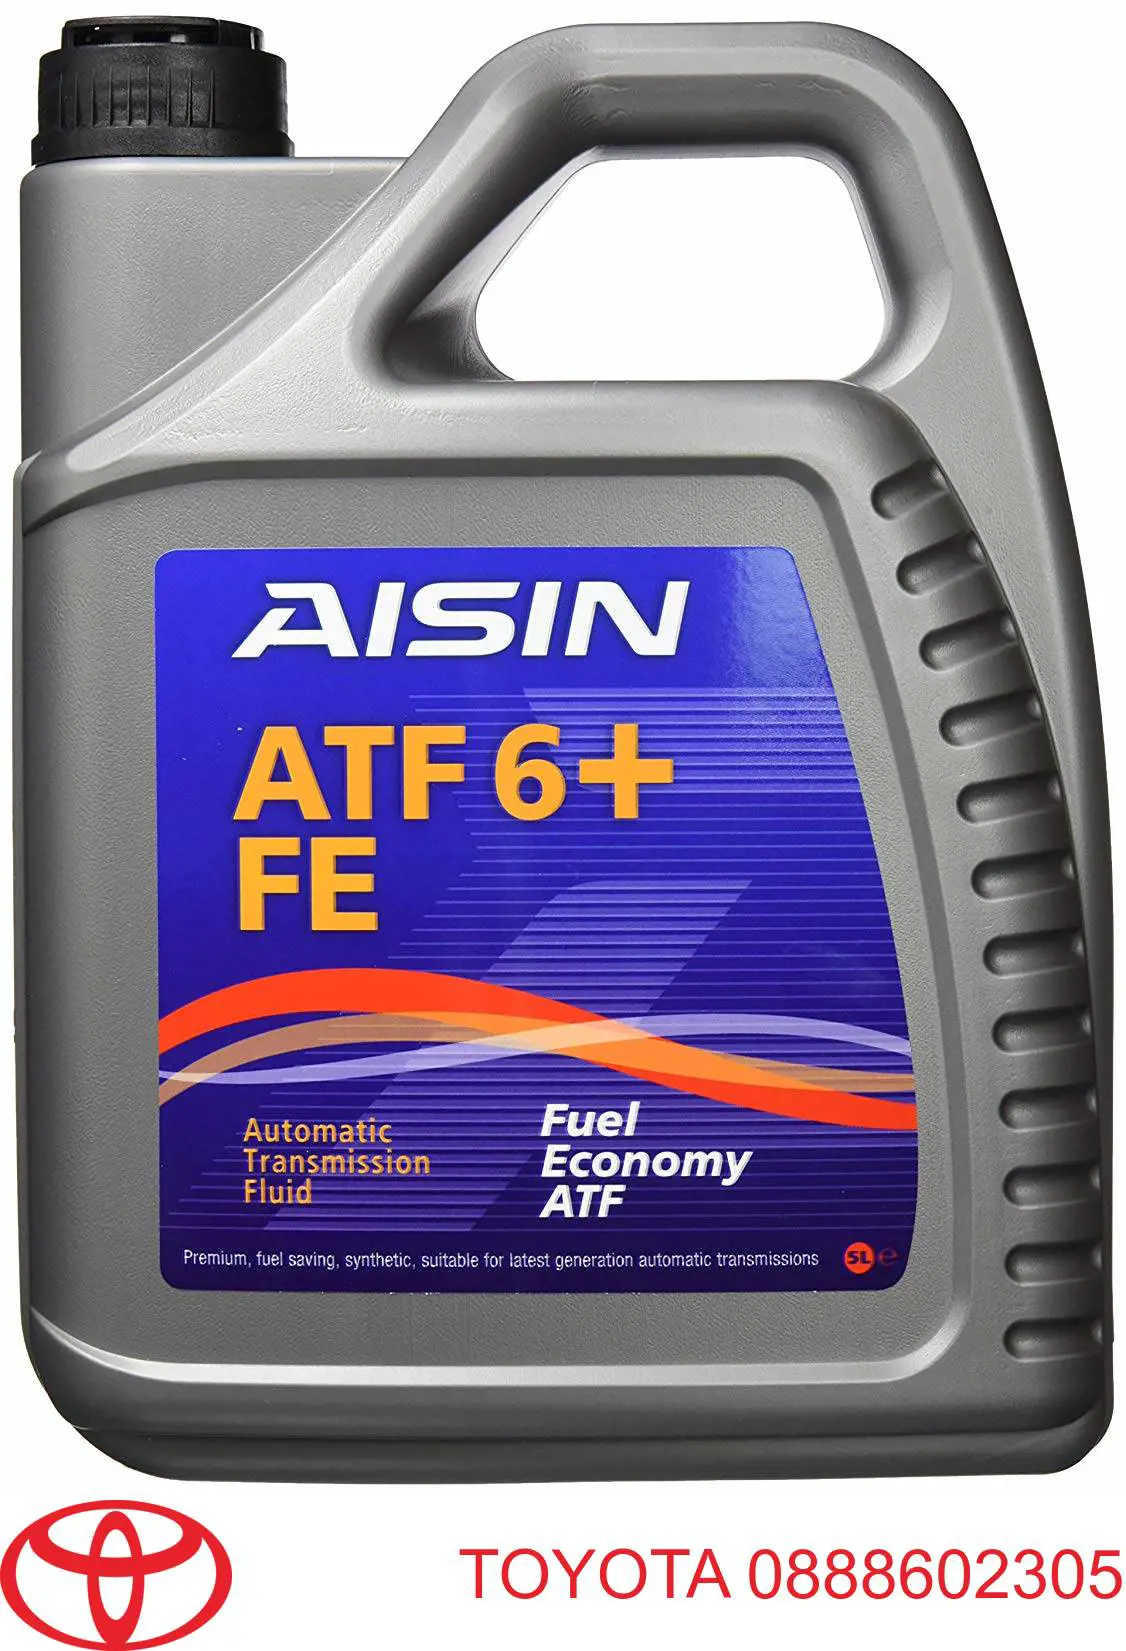 Масло в коробку айсин. AISIN ATF 3324. AISIN Premium ATF 6. AISIN ATF 6+ Fe. JWS 3324 AISIN.